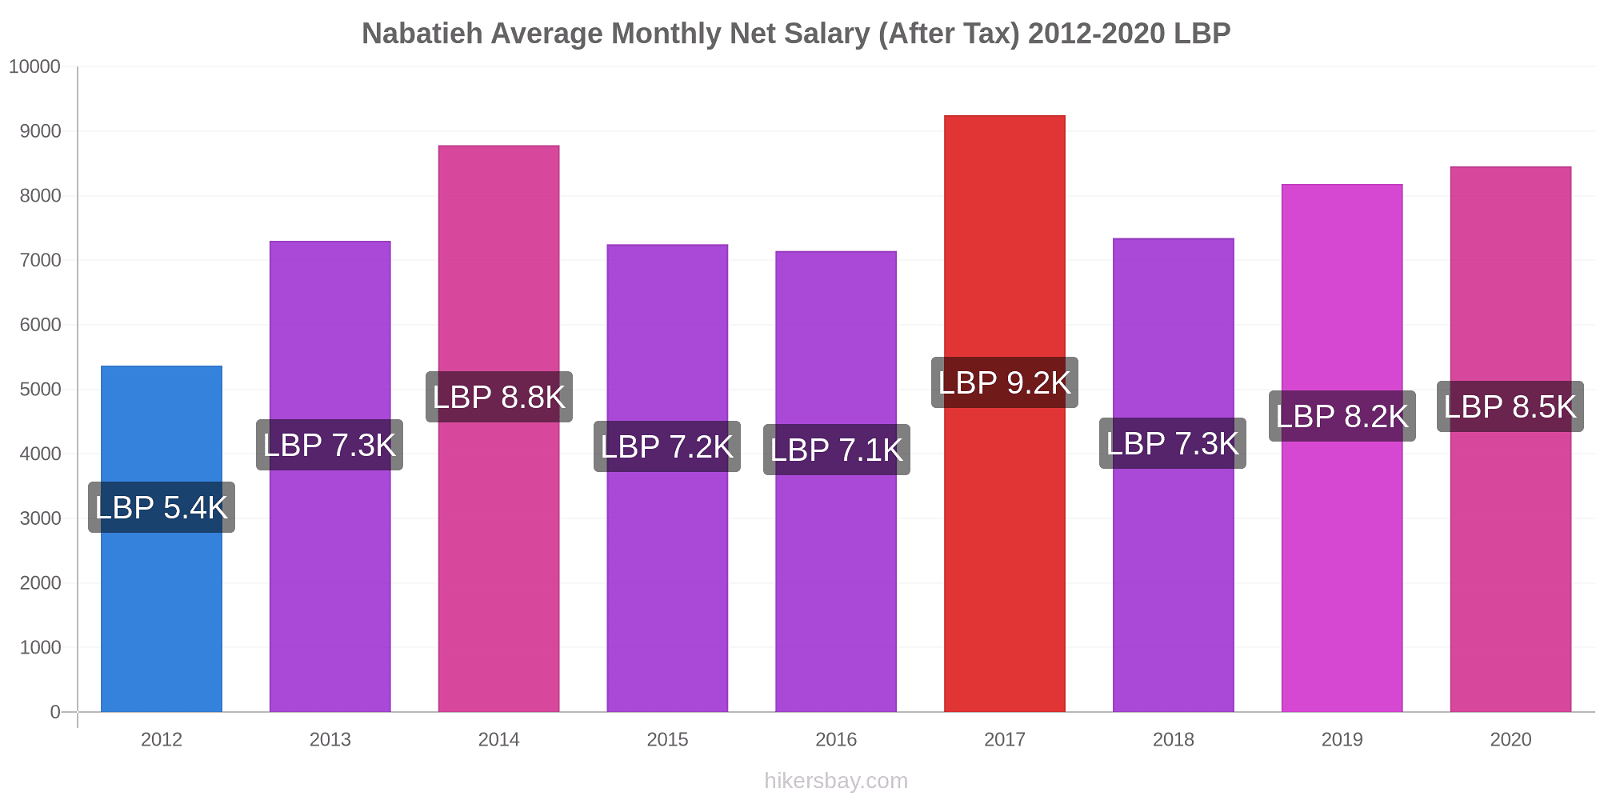 Nabatieh price changes Average Monthly Net Salary (After Tax) hikersbay.com